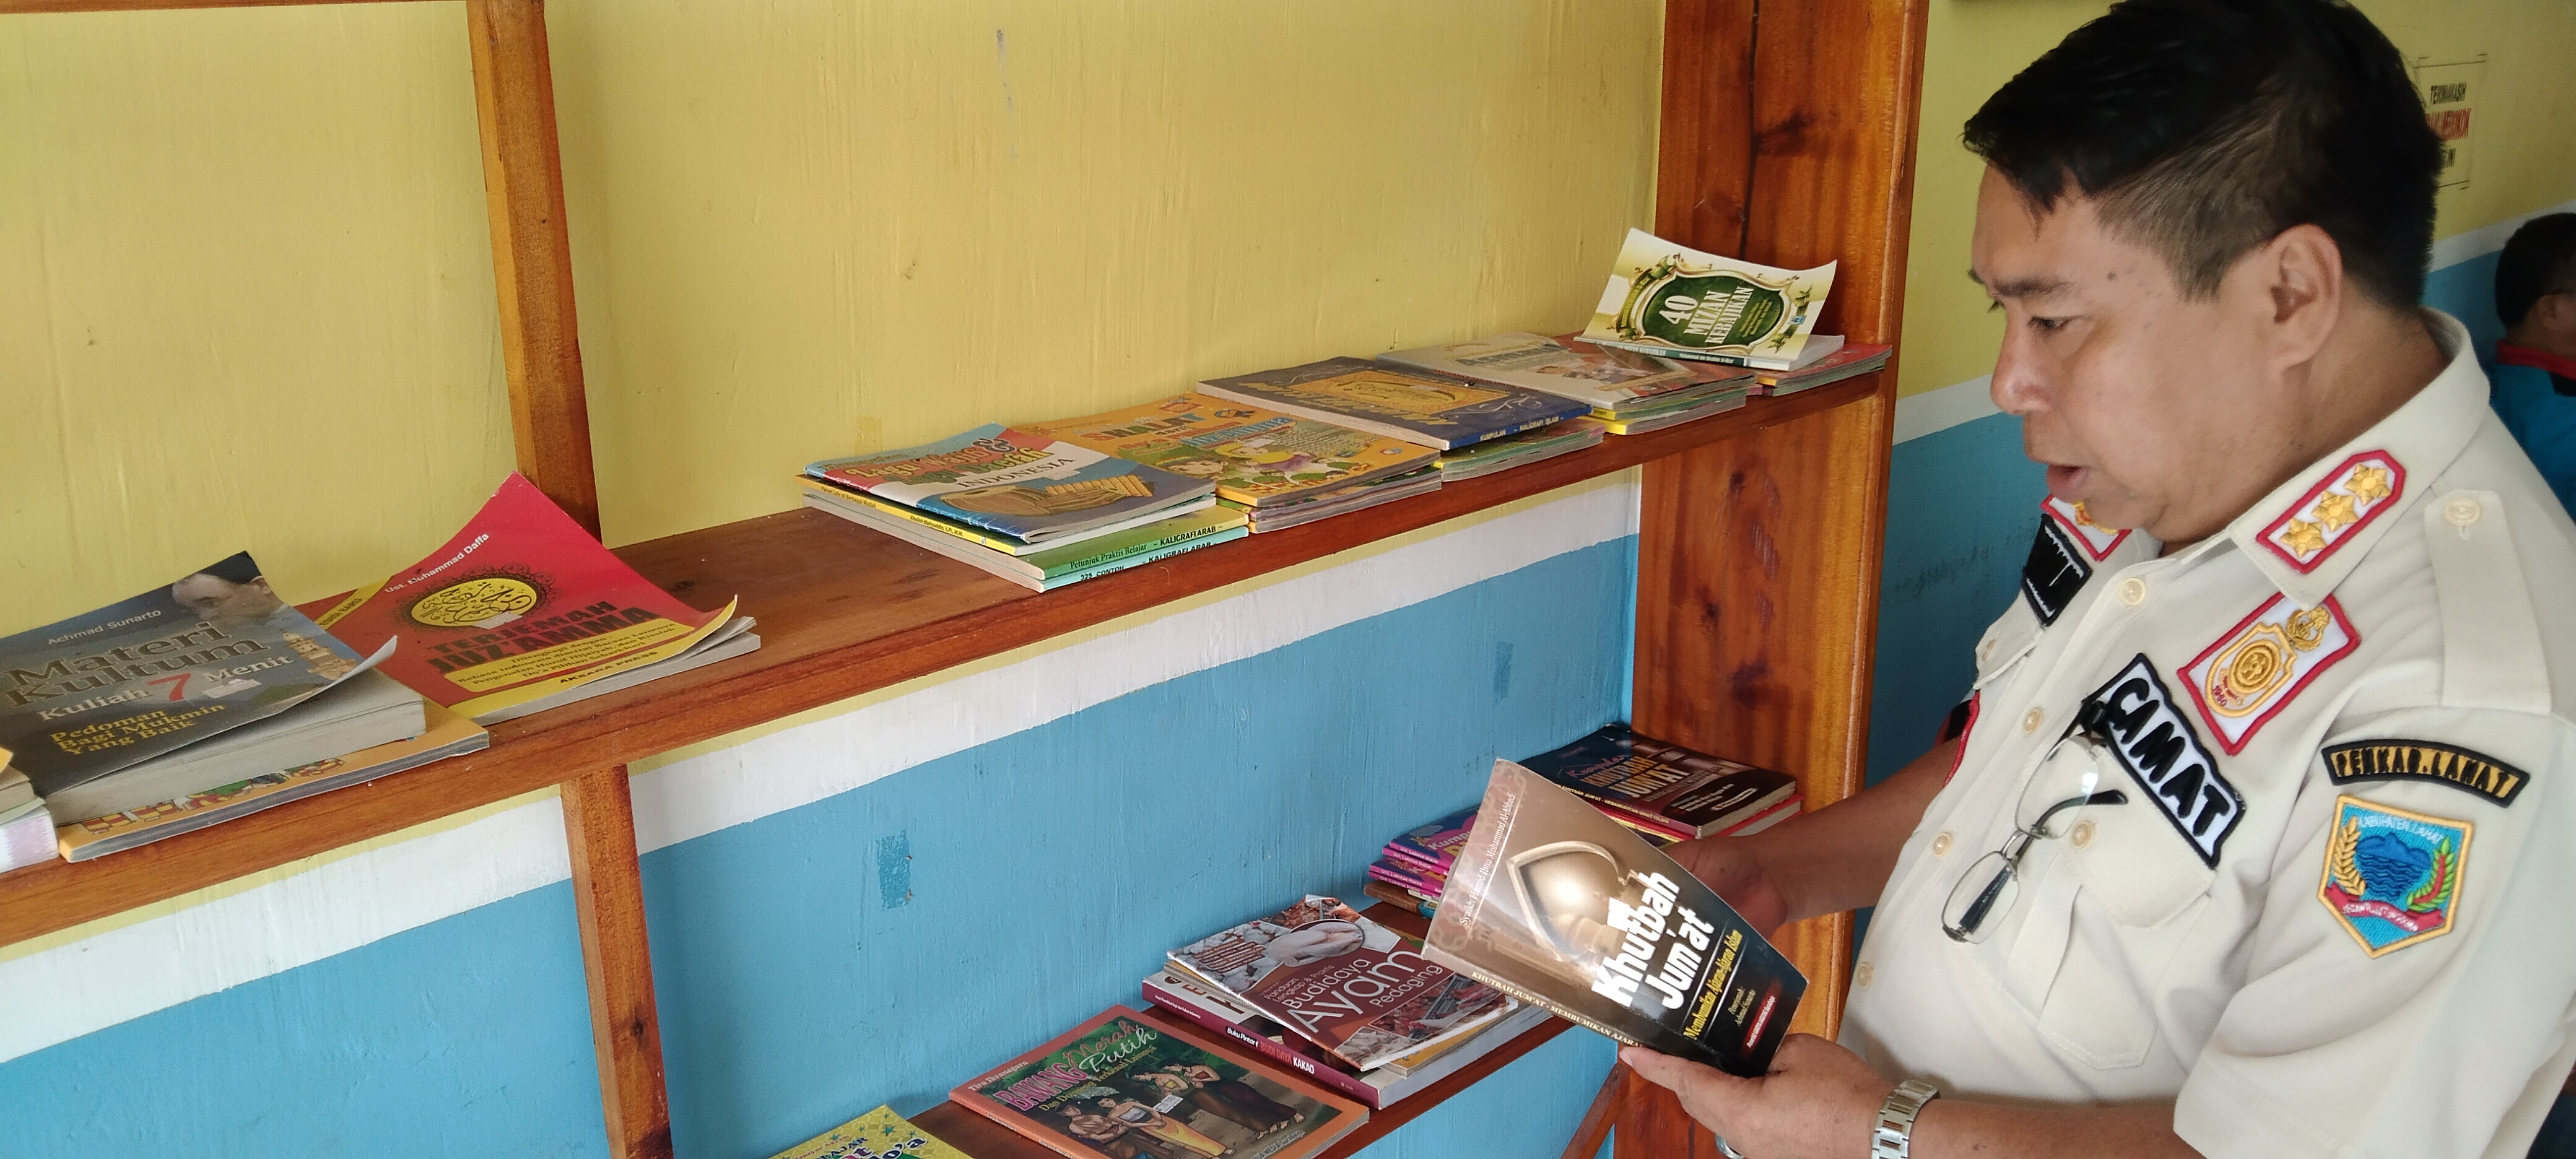 Tingkatkan Minat Baca Anak, Seluruh Desa di Kikim Selatan Miliki Perpustakaan 